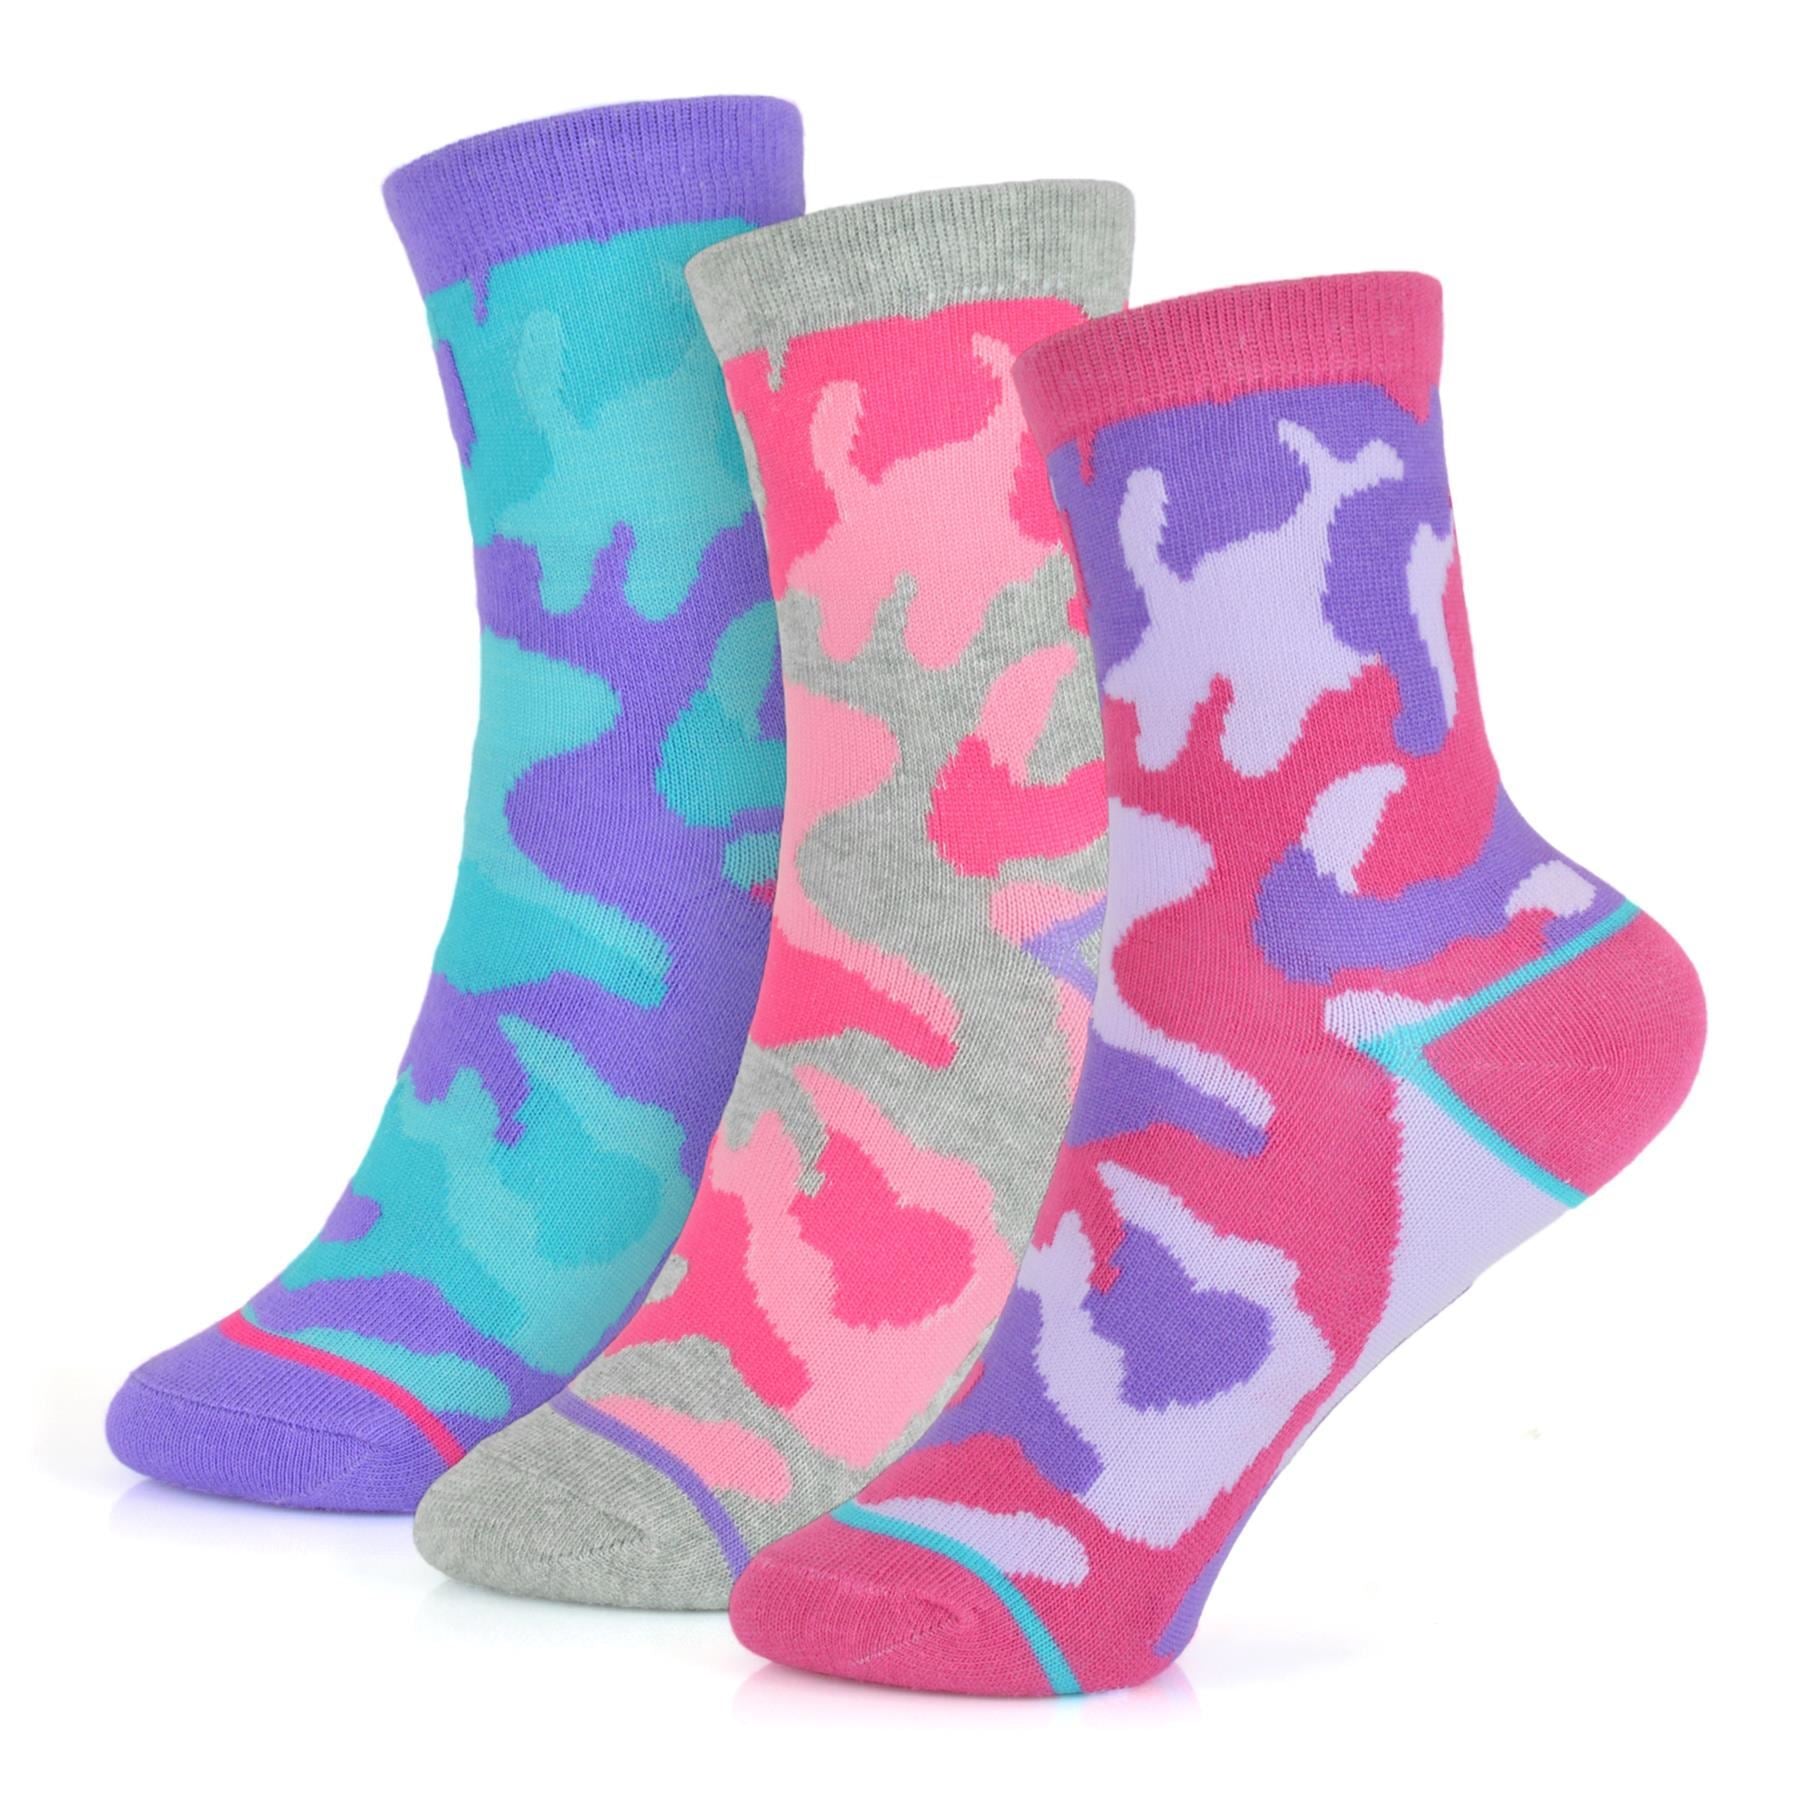 Kids Girls Camouflage & Animal Print Socks Pack of 3 Kids Cotton Rich Socks